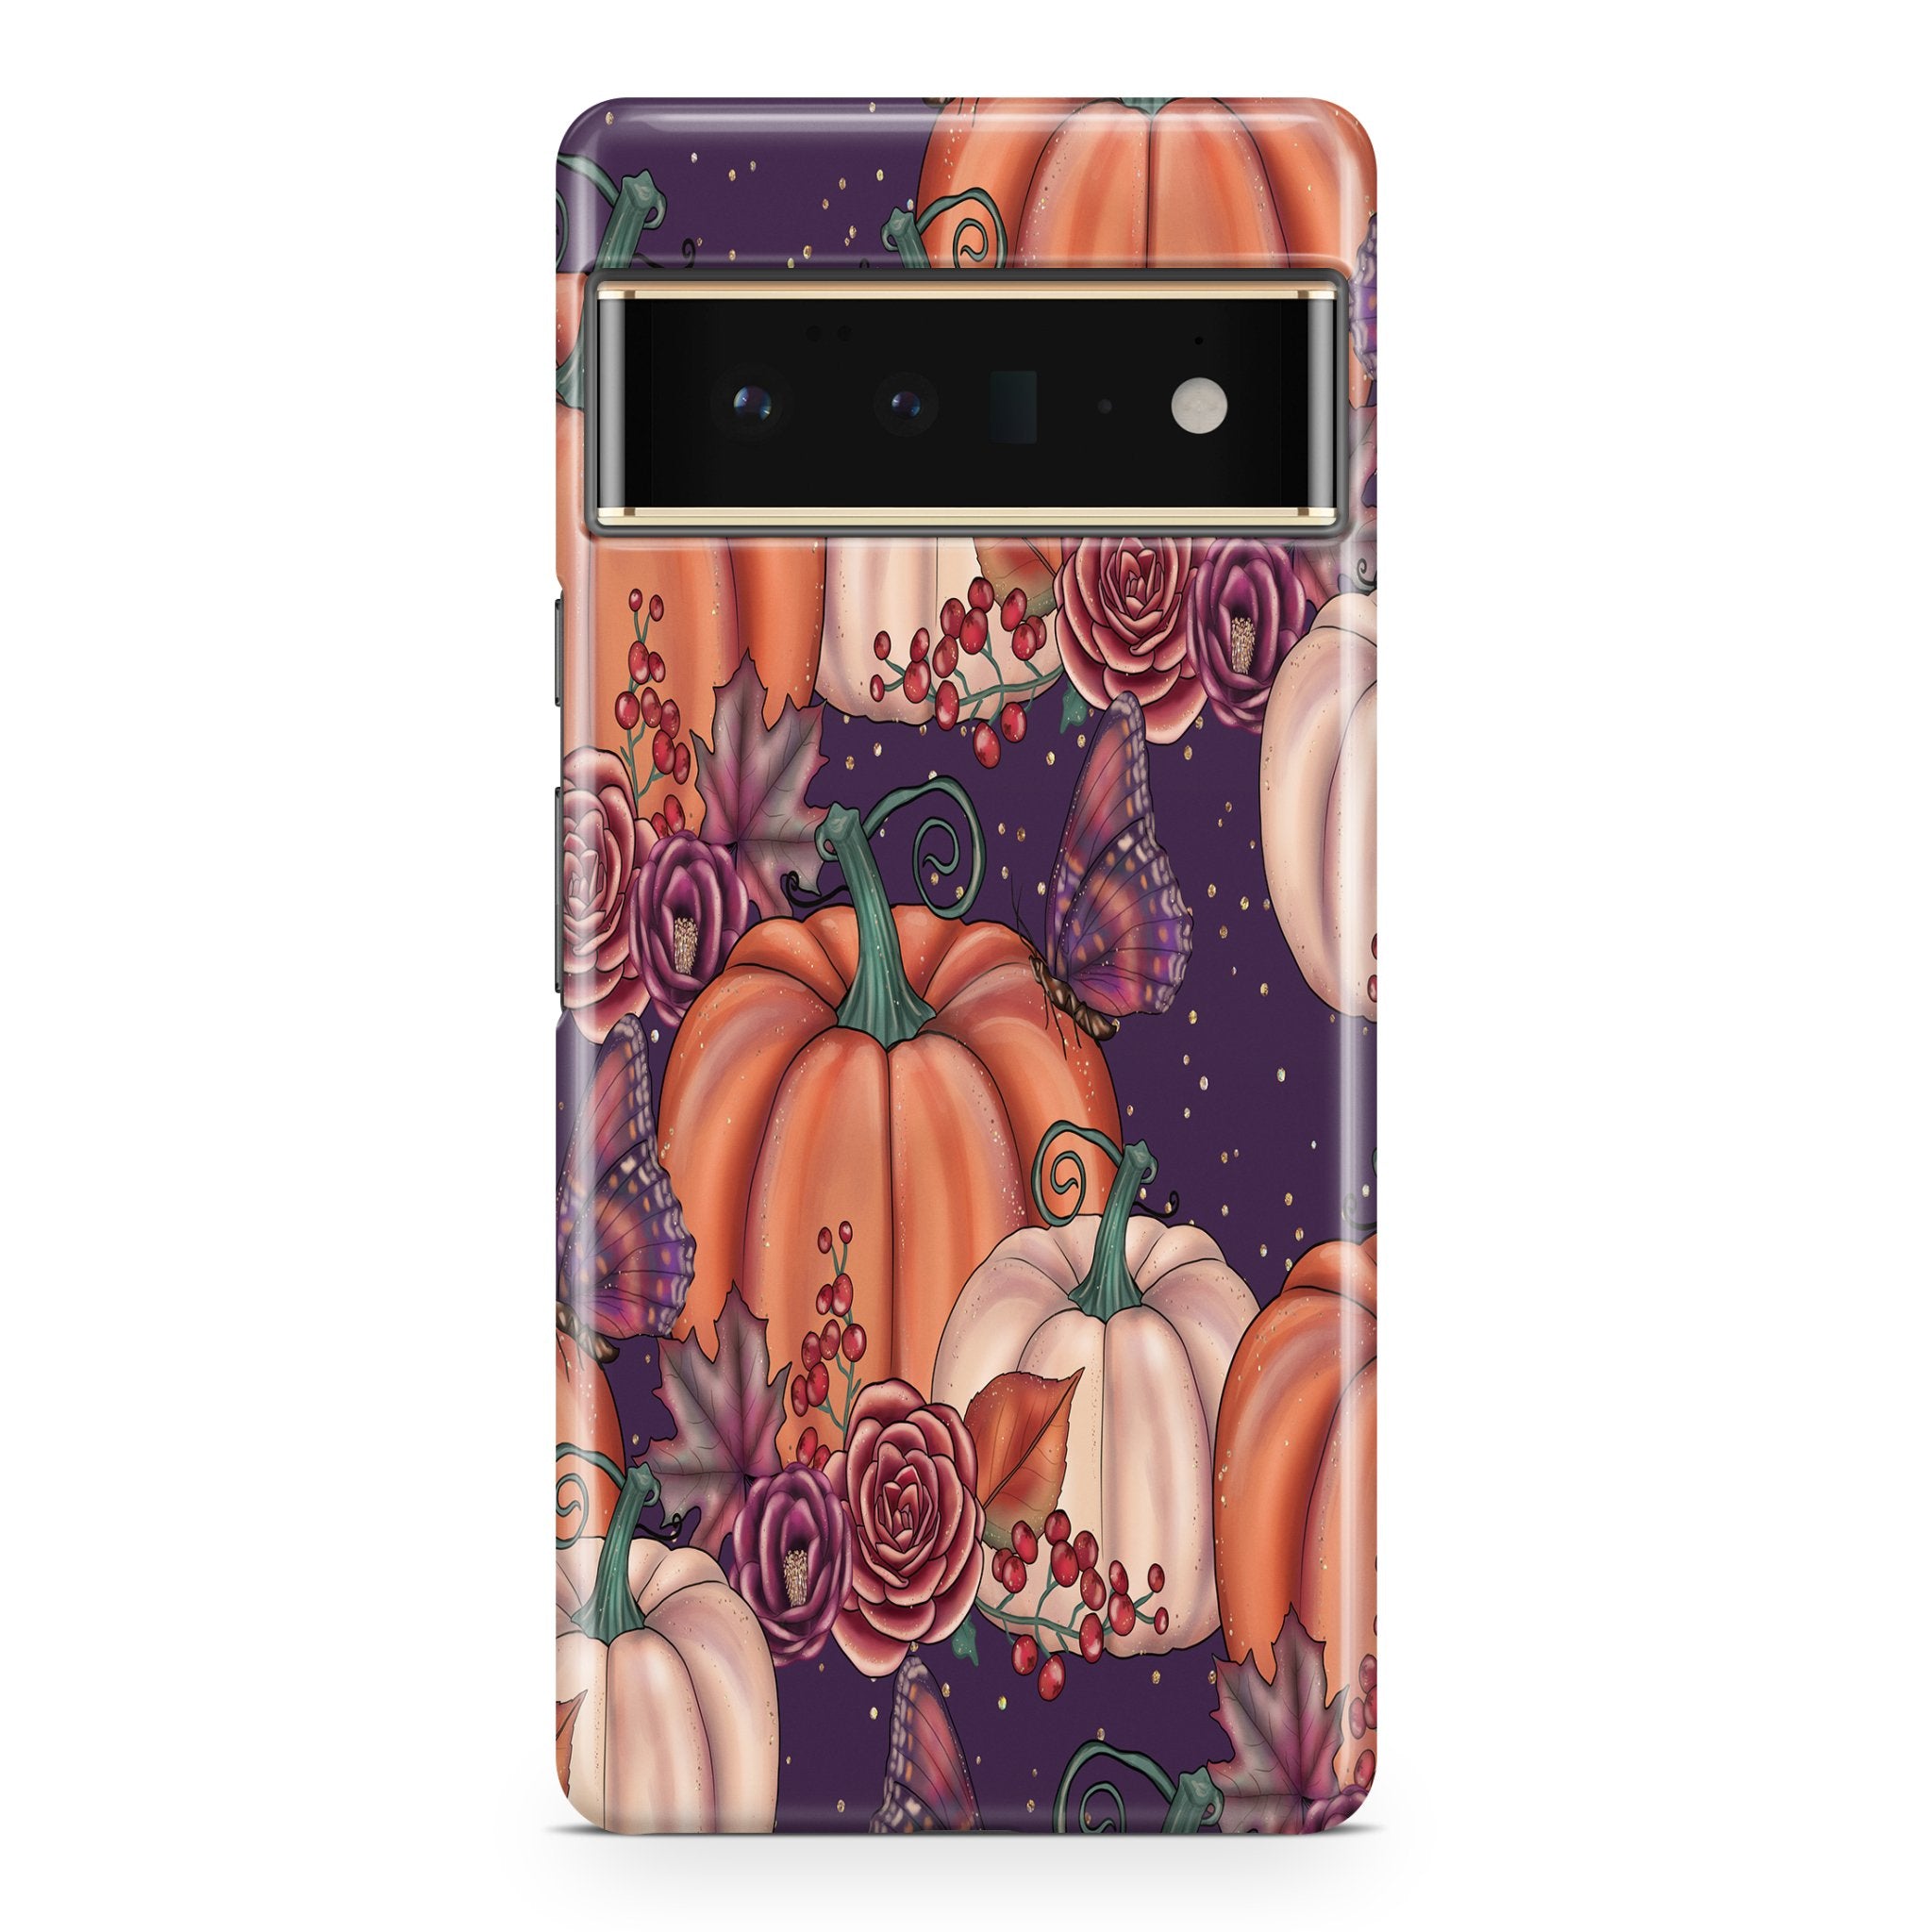 Autumn Pumpkin - Google phone case designs by CaseSwagger